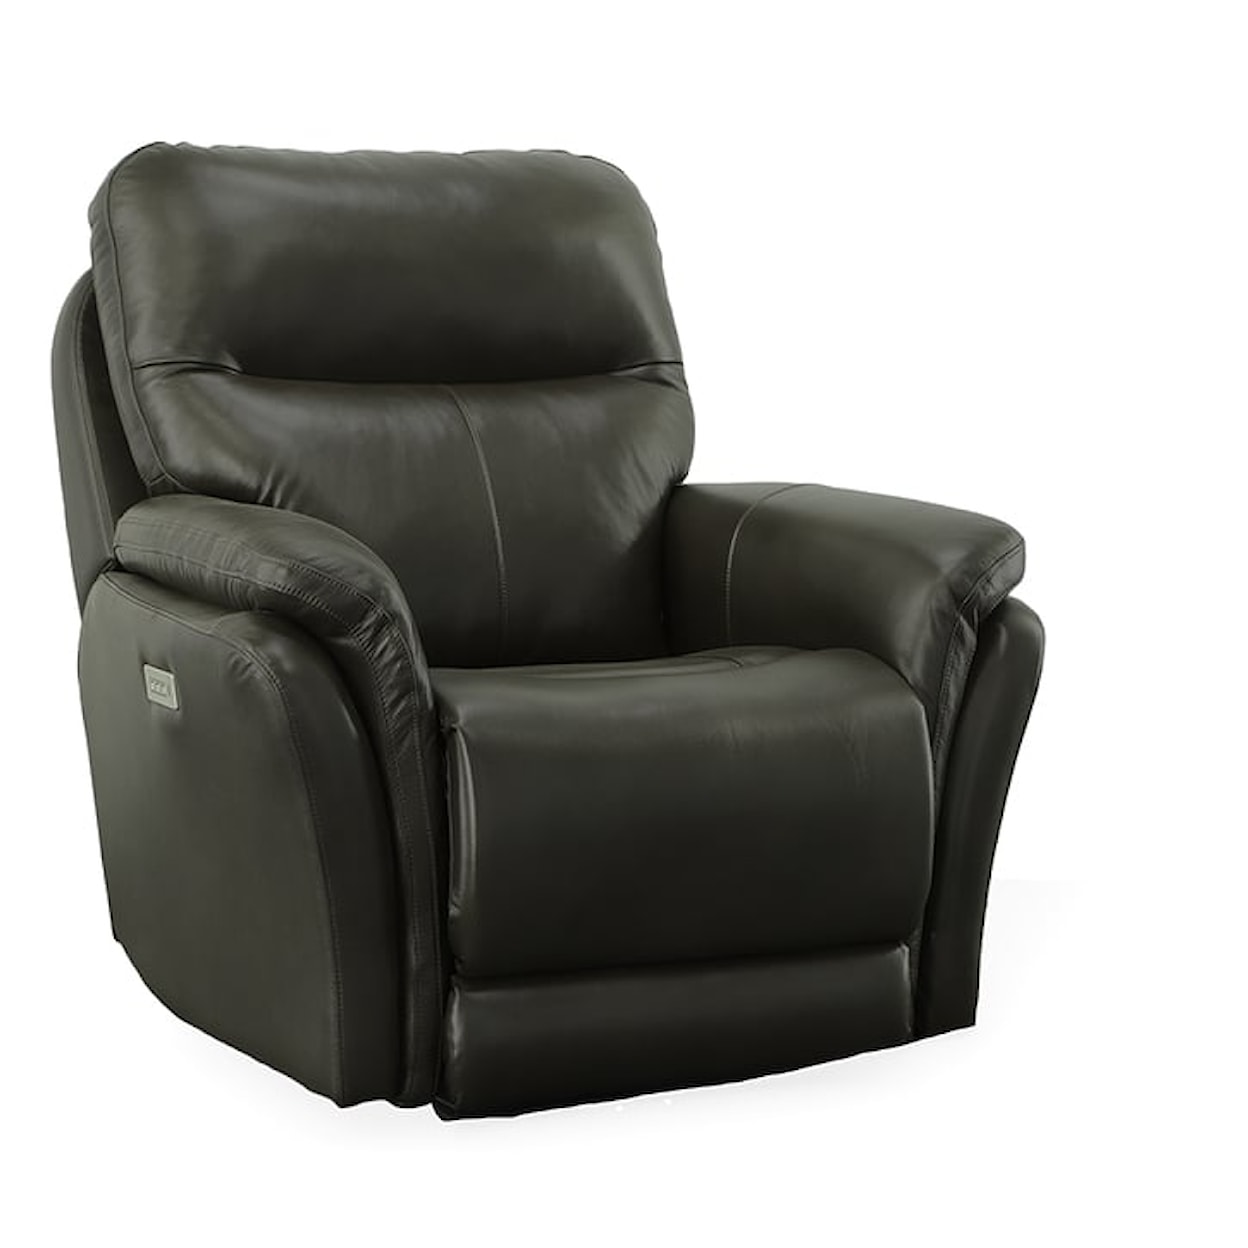 Stanton 725 Pwr HR/Lumbar Recl. Chair